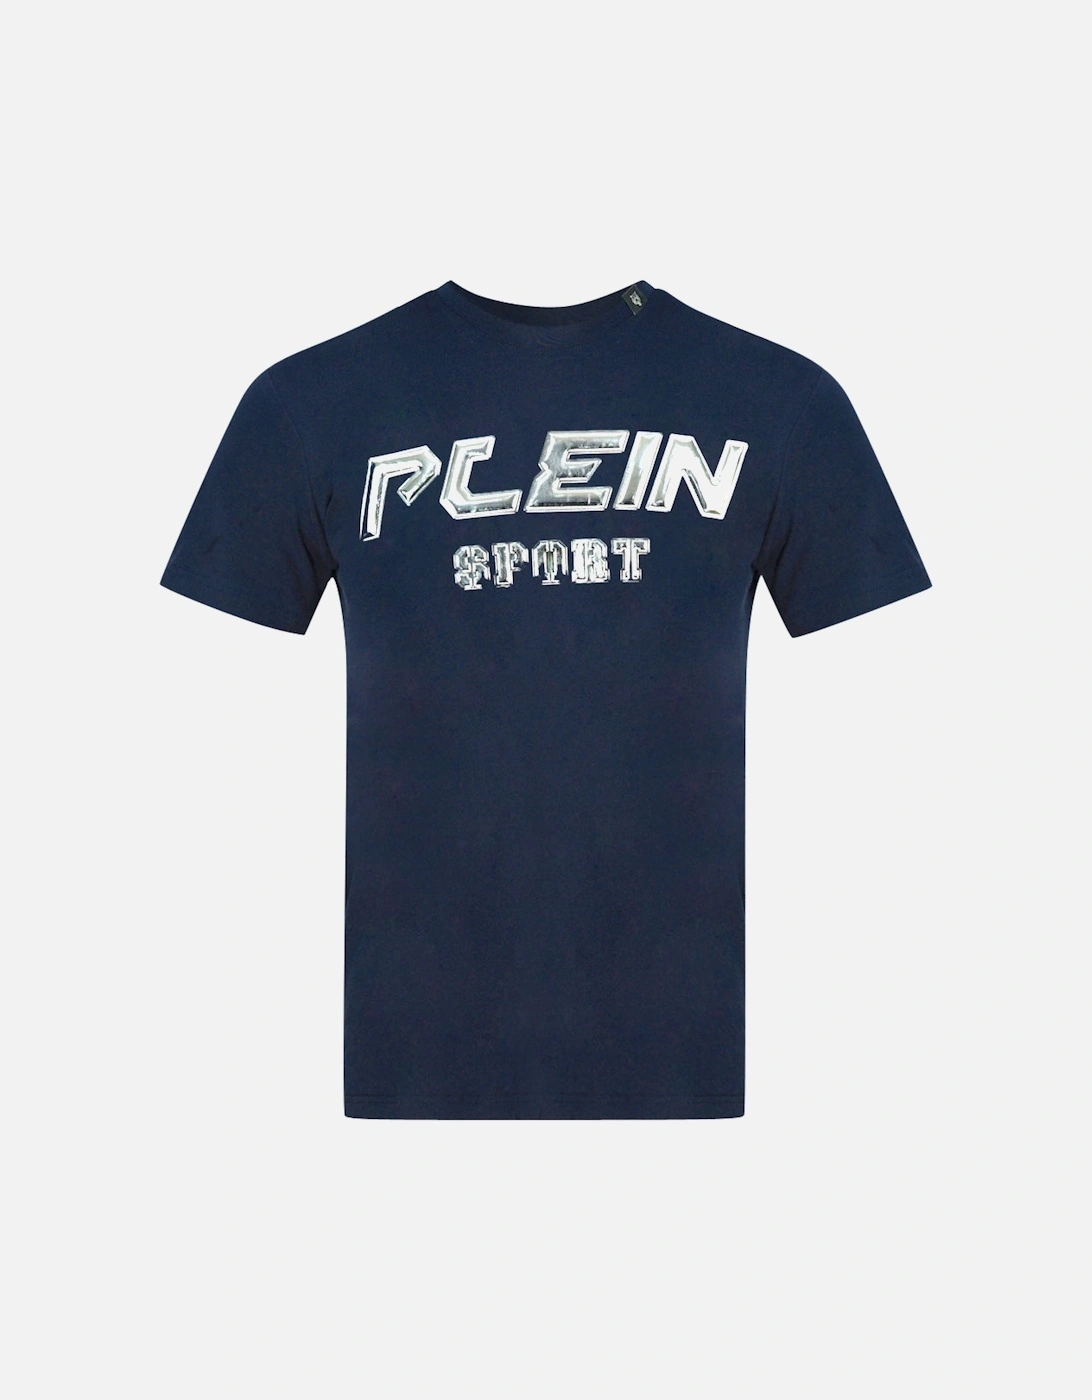 Plein Sport Black 3D Logo Navy Blue T-Shirt